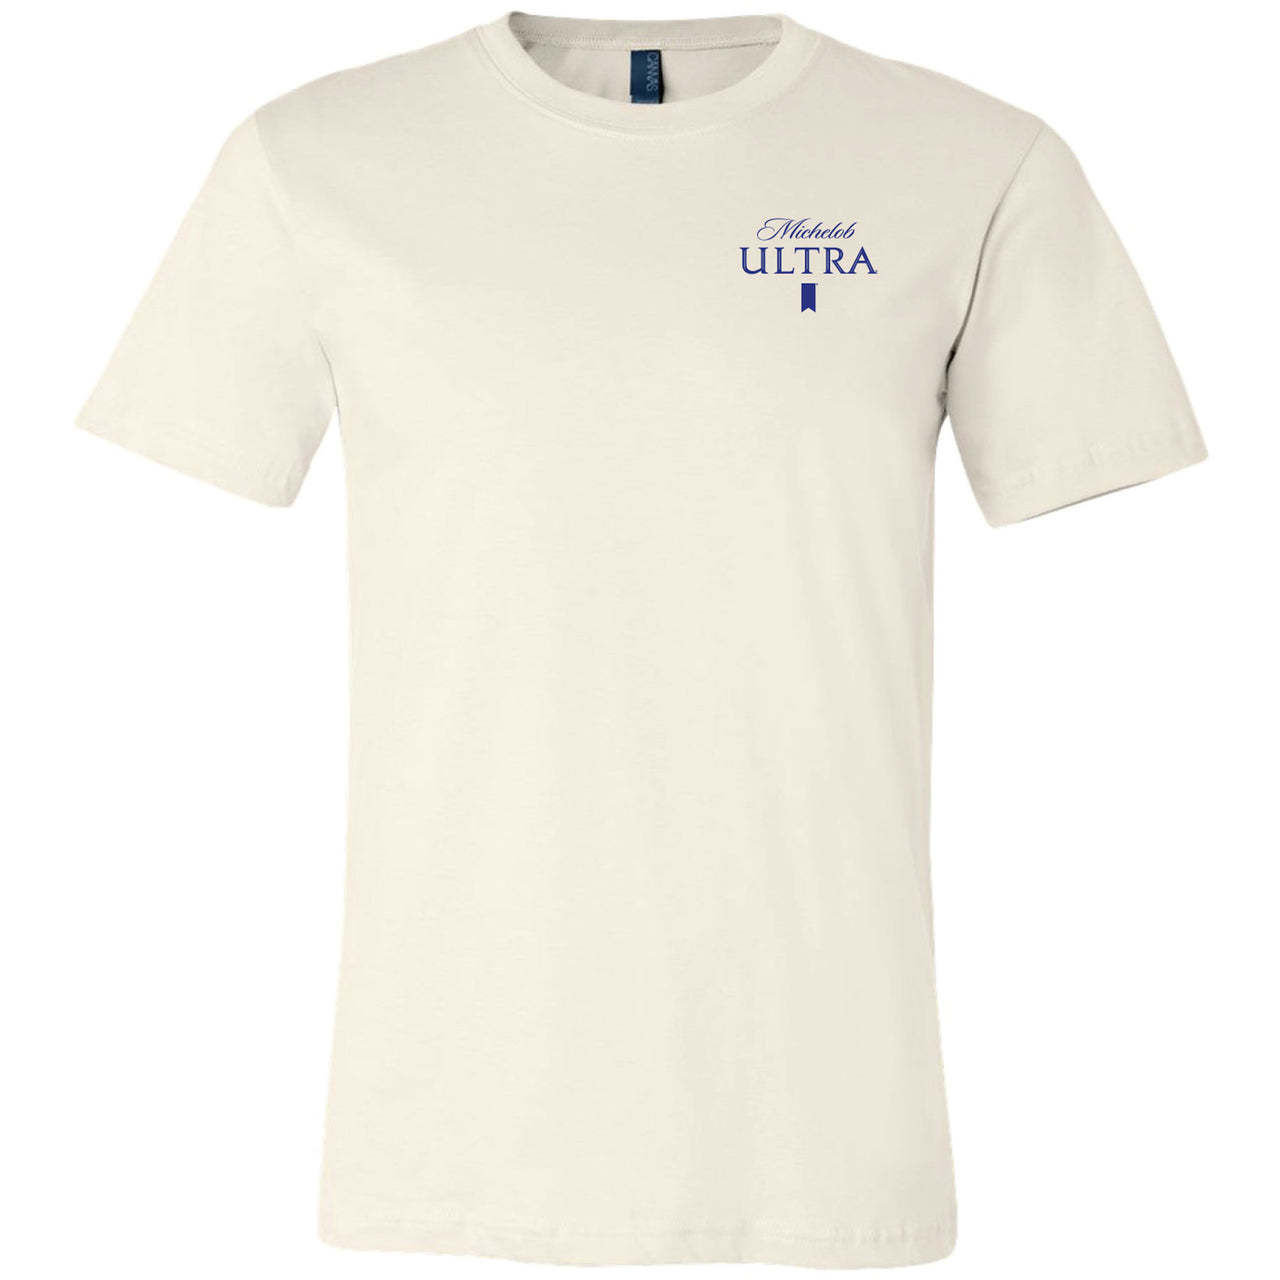 Michelob Ultra - Golf Caddie 2-sided T-Shirt